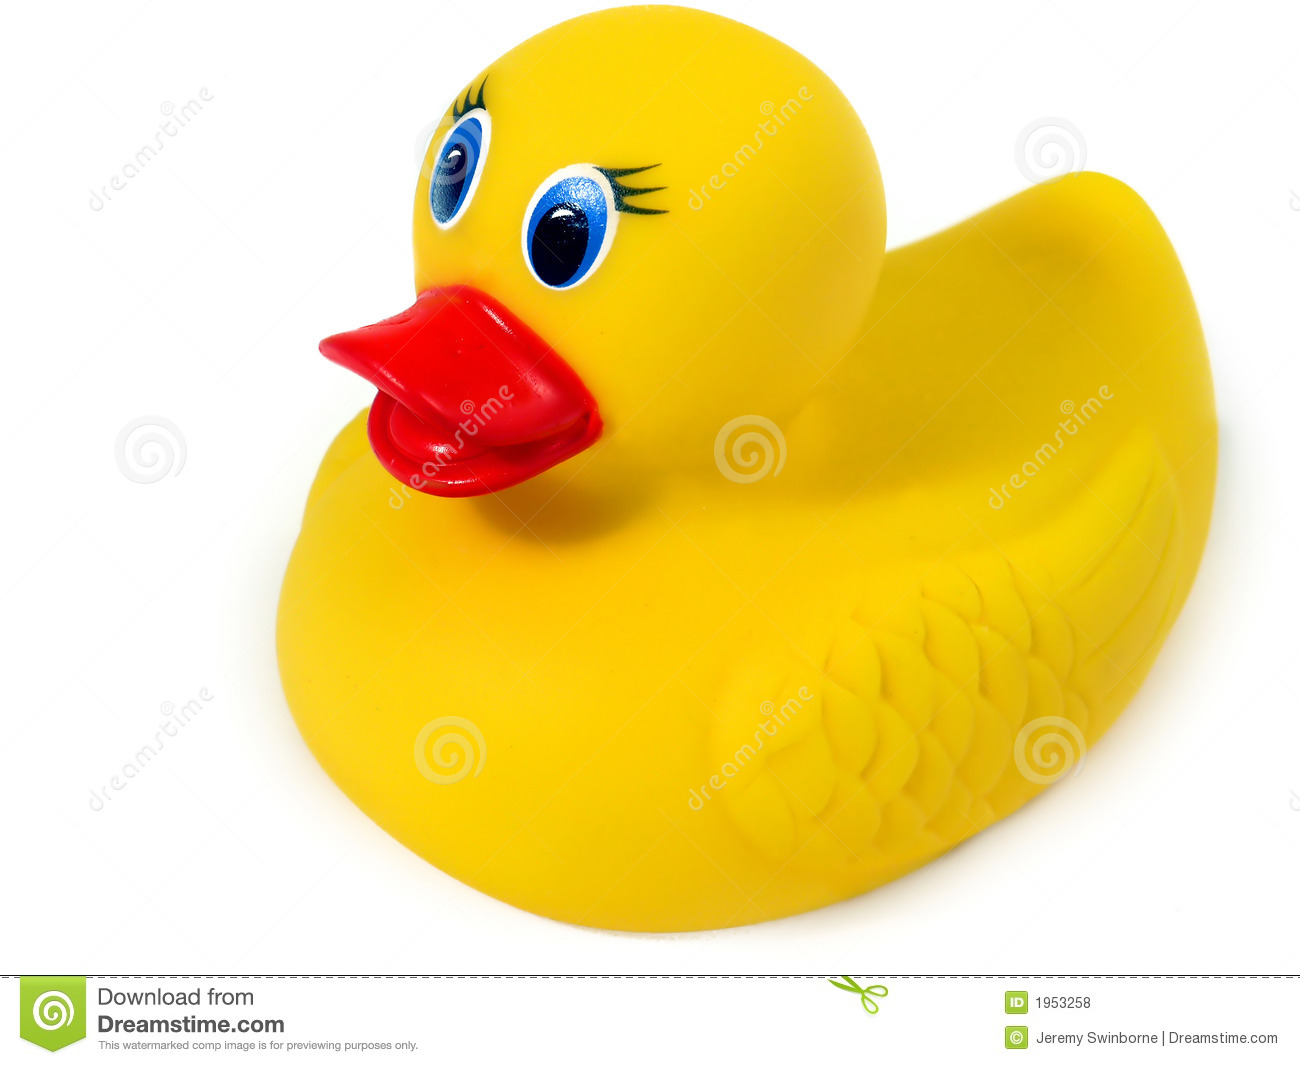 Rubber Duck Clip Art Rubber Ducky Royalty Free Stock Photos Image